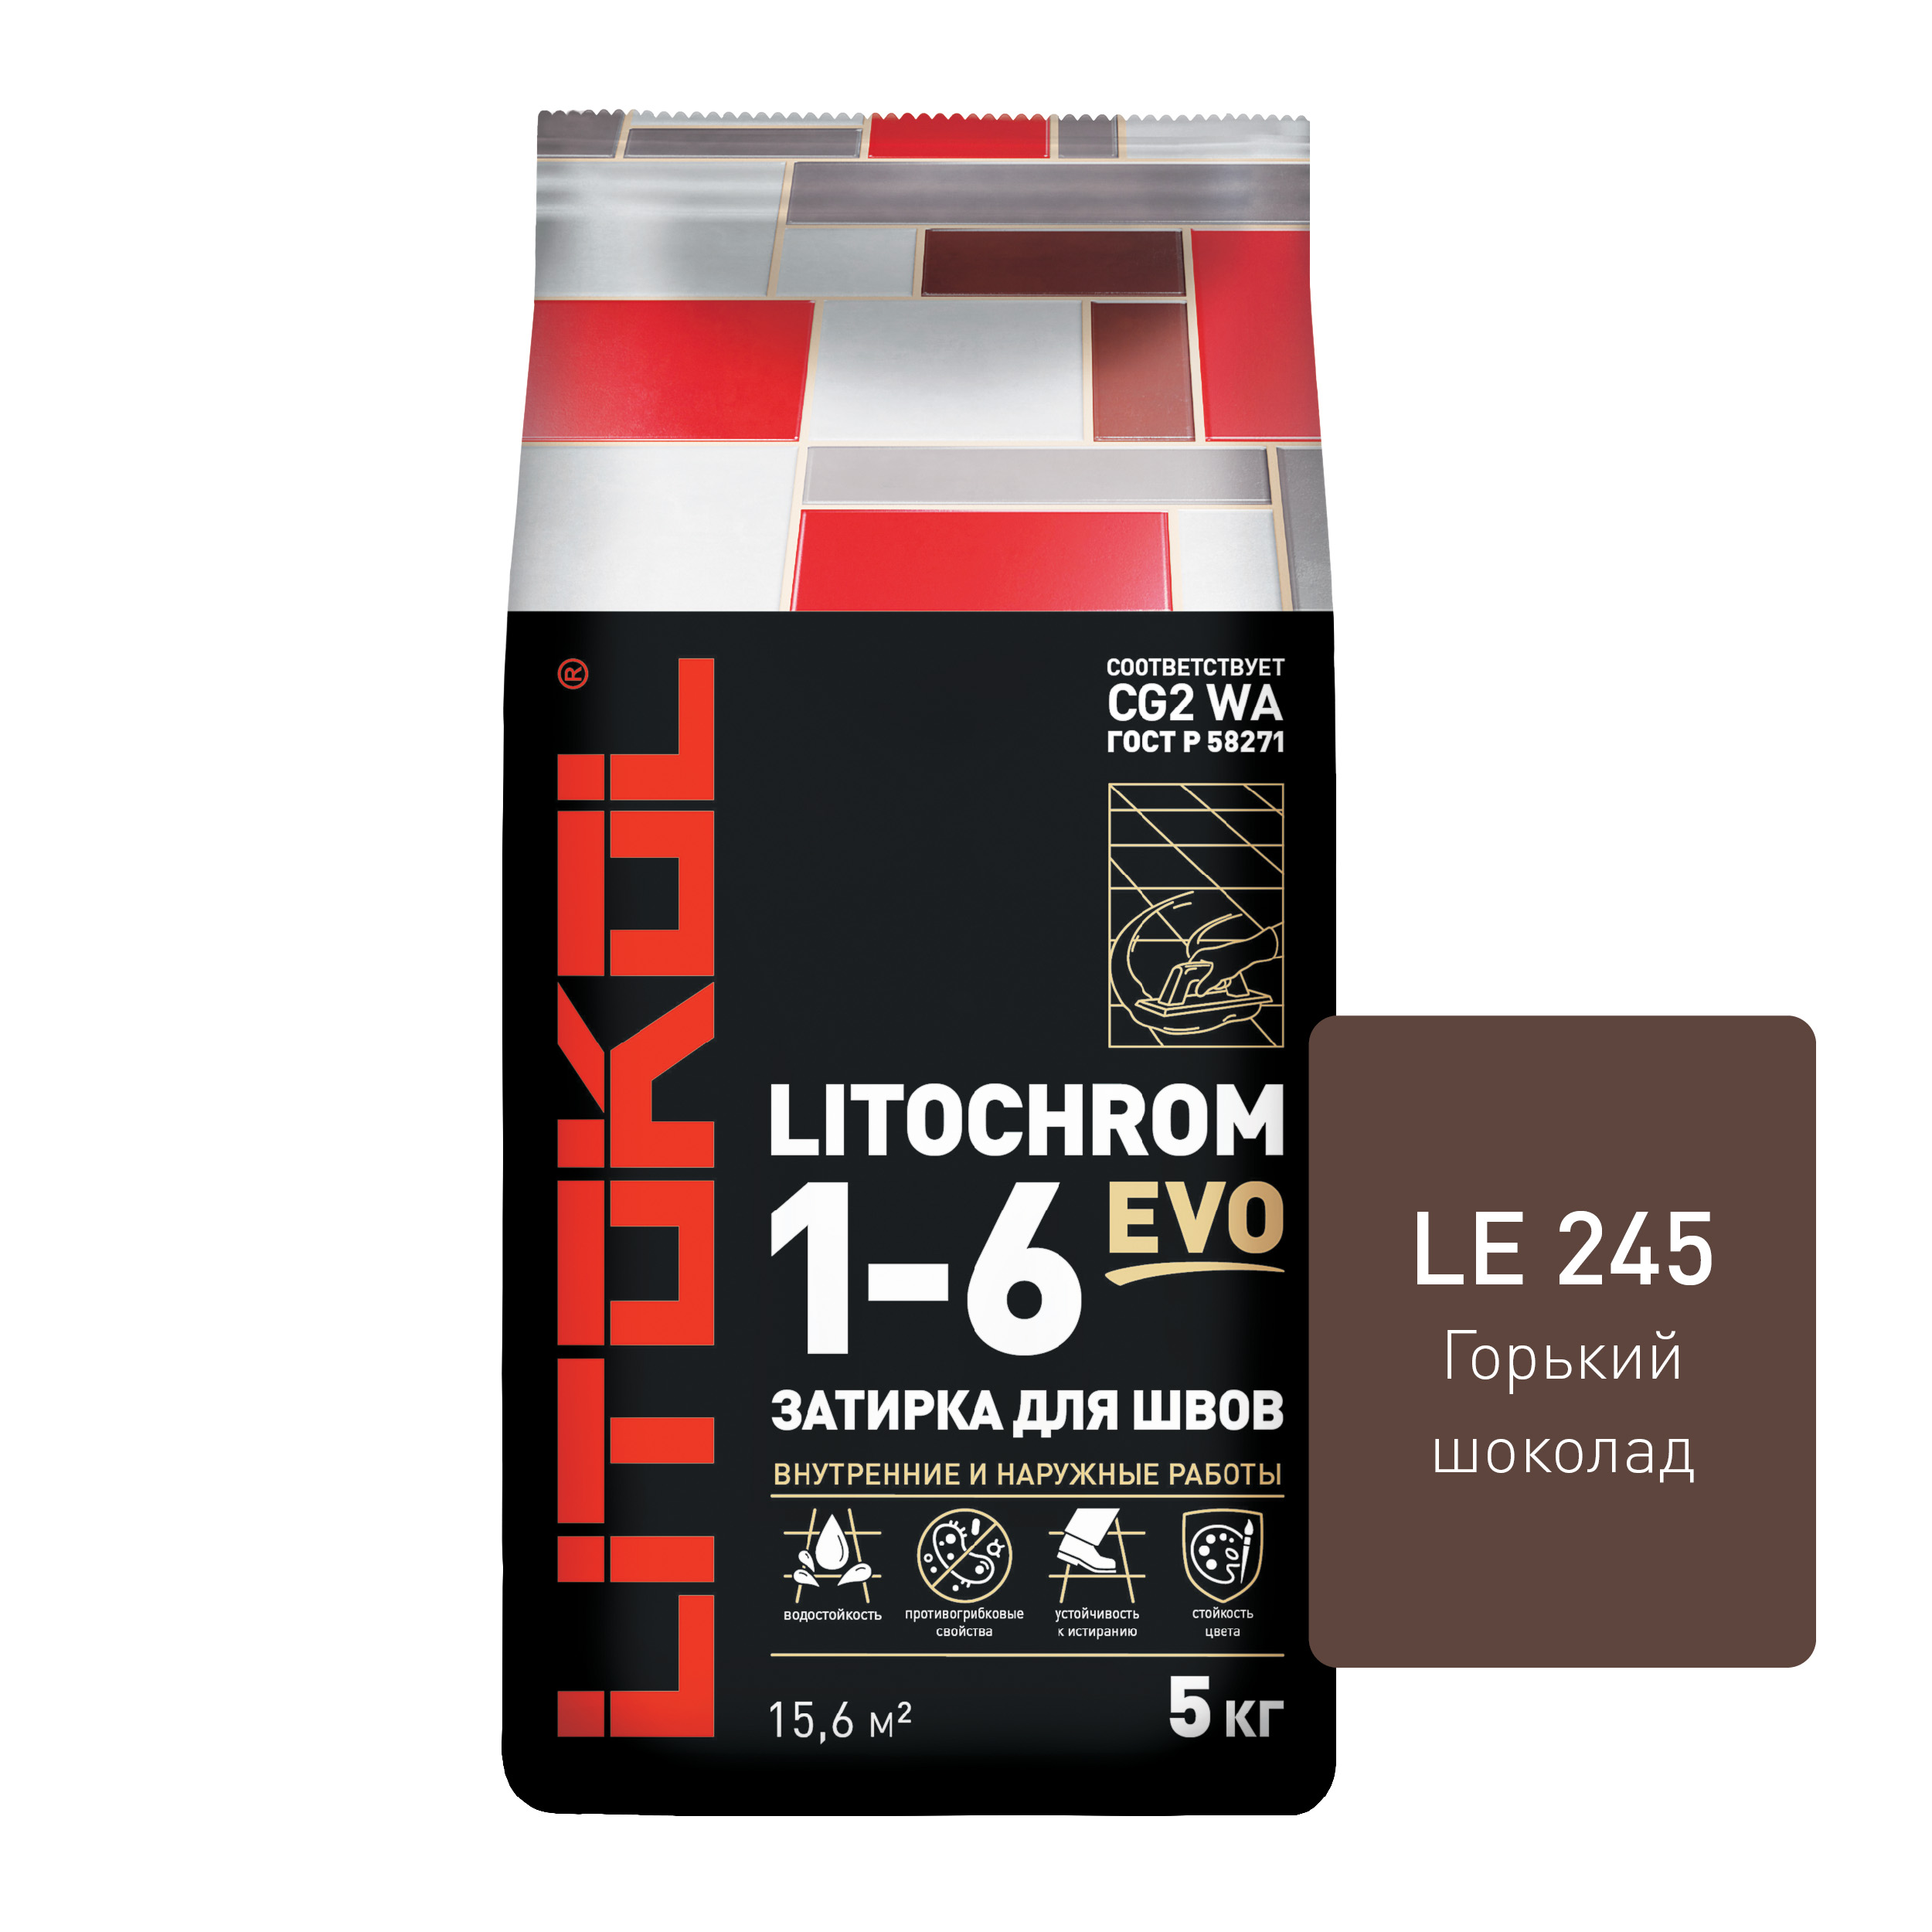 Цементная затирка LITOKOL LITOCHROM 1-6 EVO LE.245 Горький шоколад, 5 кг шоколад ozera dark горький какао 55% 90 гр